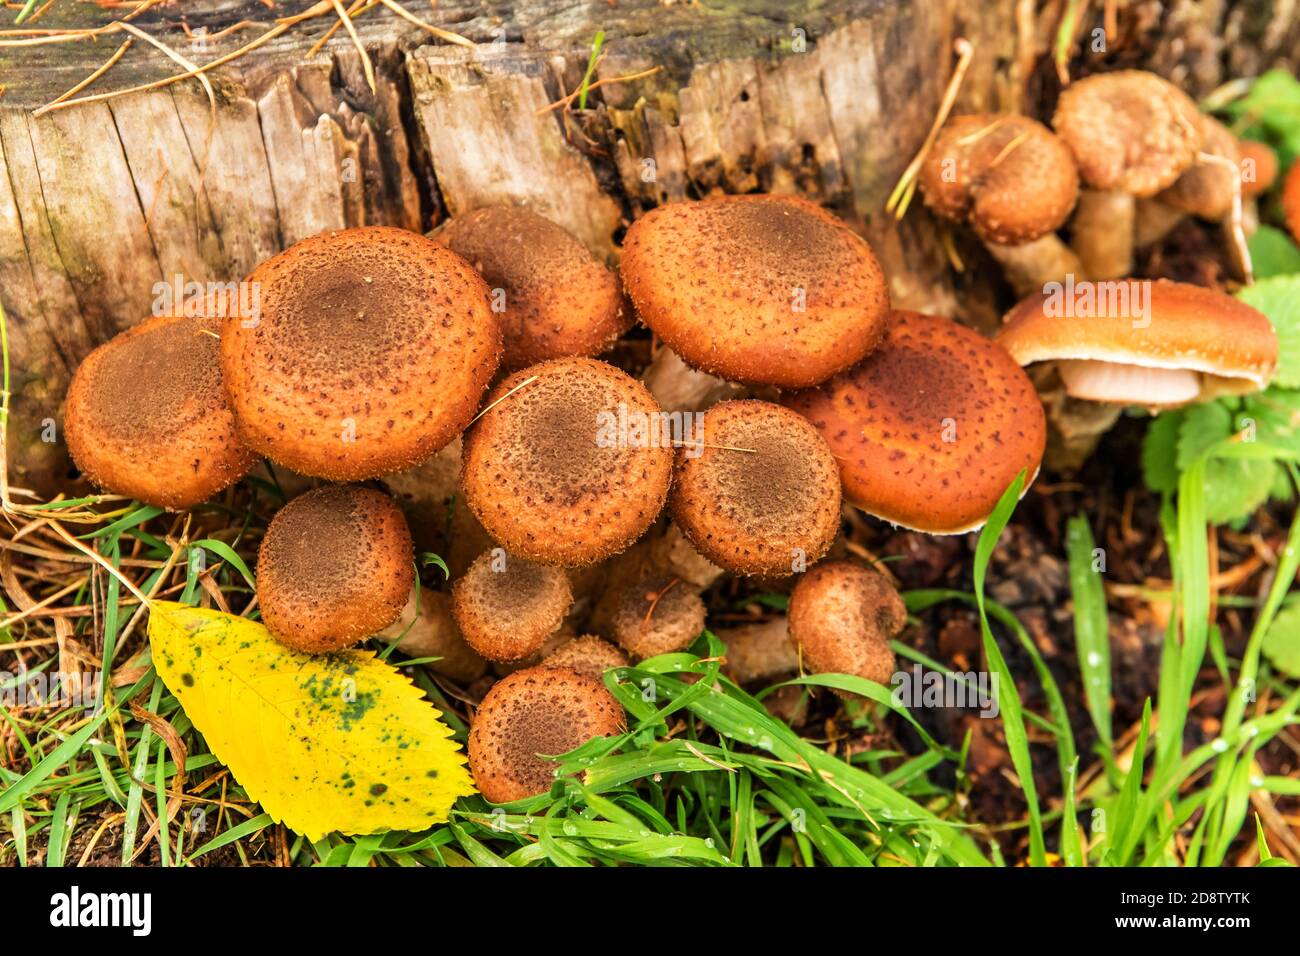 Edible forest mushroom - Armillaria mellea commonly known as honey fungus. Mushroom picking. A basidiomycete fungus in the genus Armillaria (close-up) Stock Photo